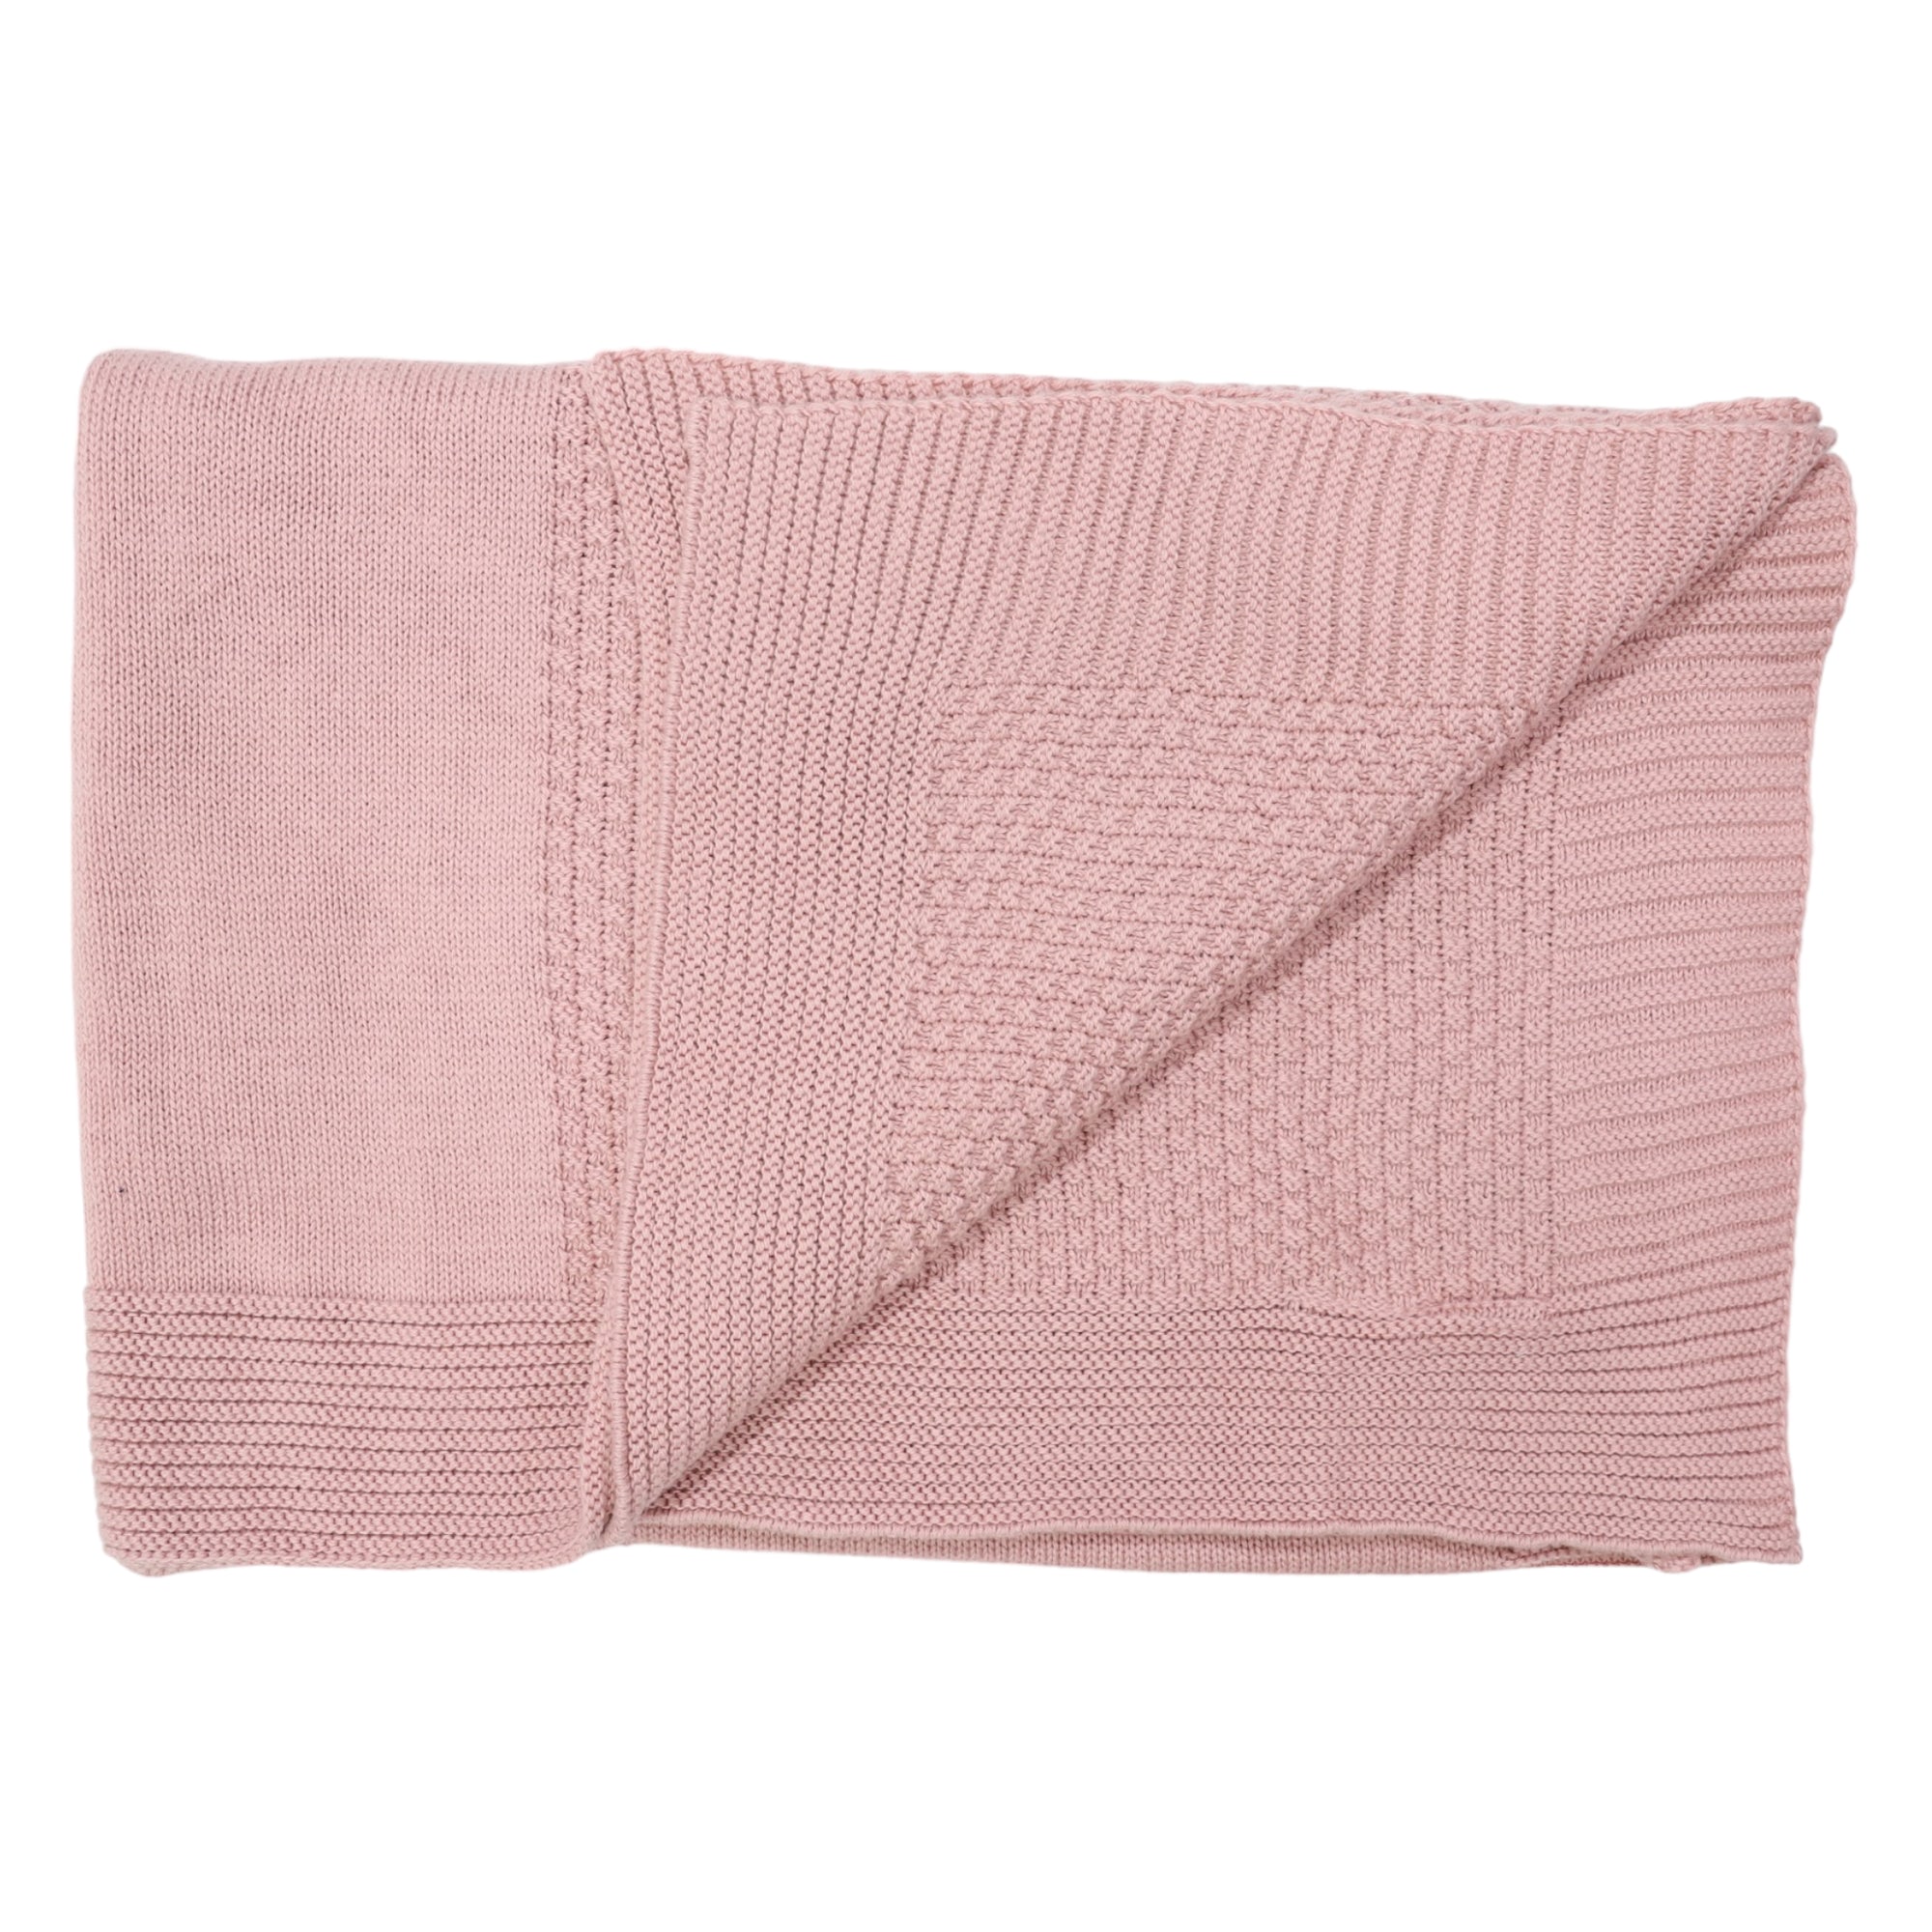 Mill & Hide - Korango - Textured Knit Blanket